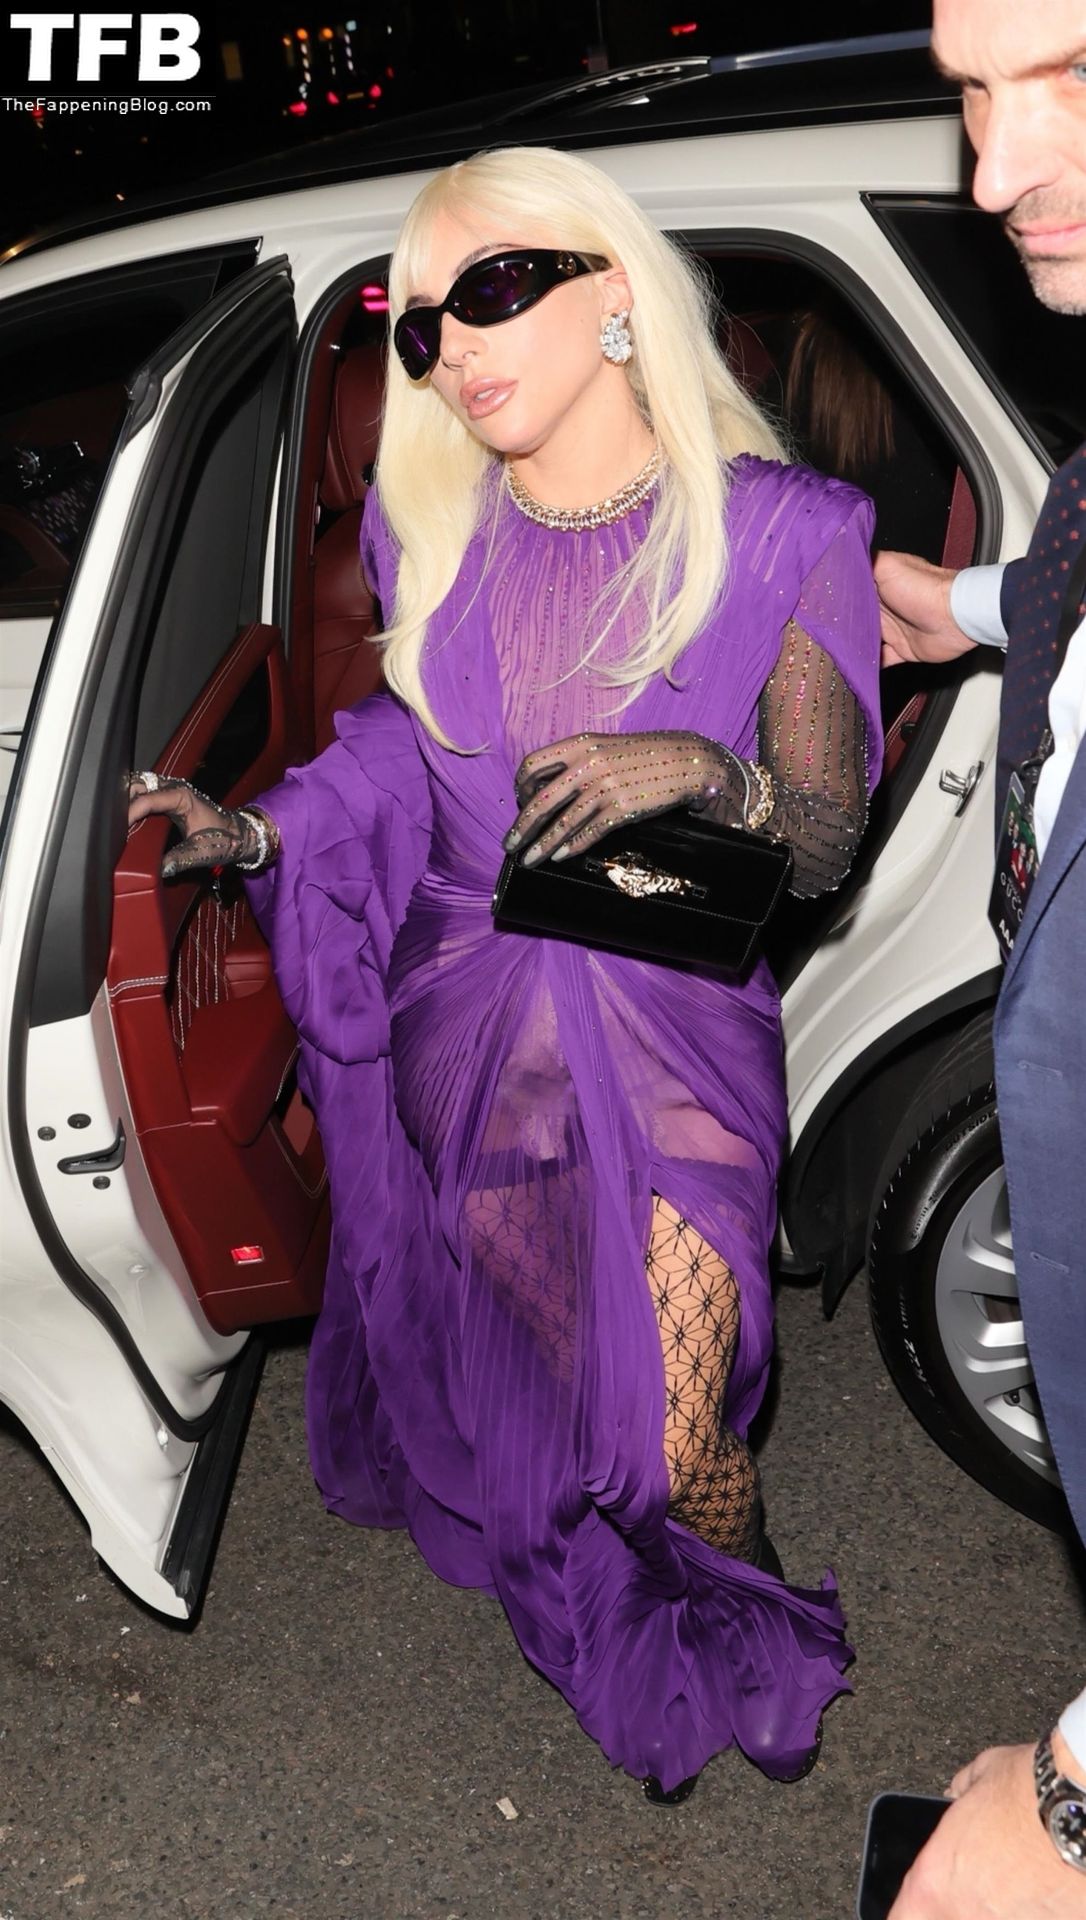 Lady-Gaga-Sexy-The-Fappening-Blog-15.jpg